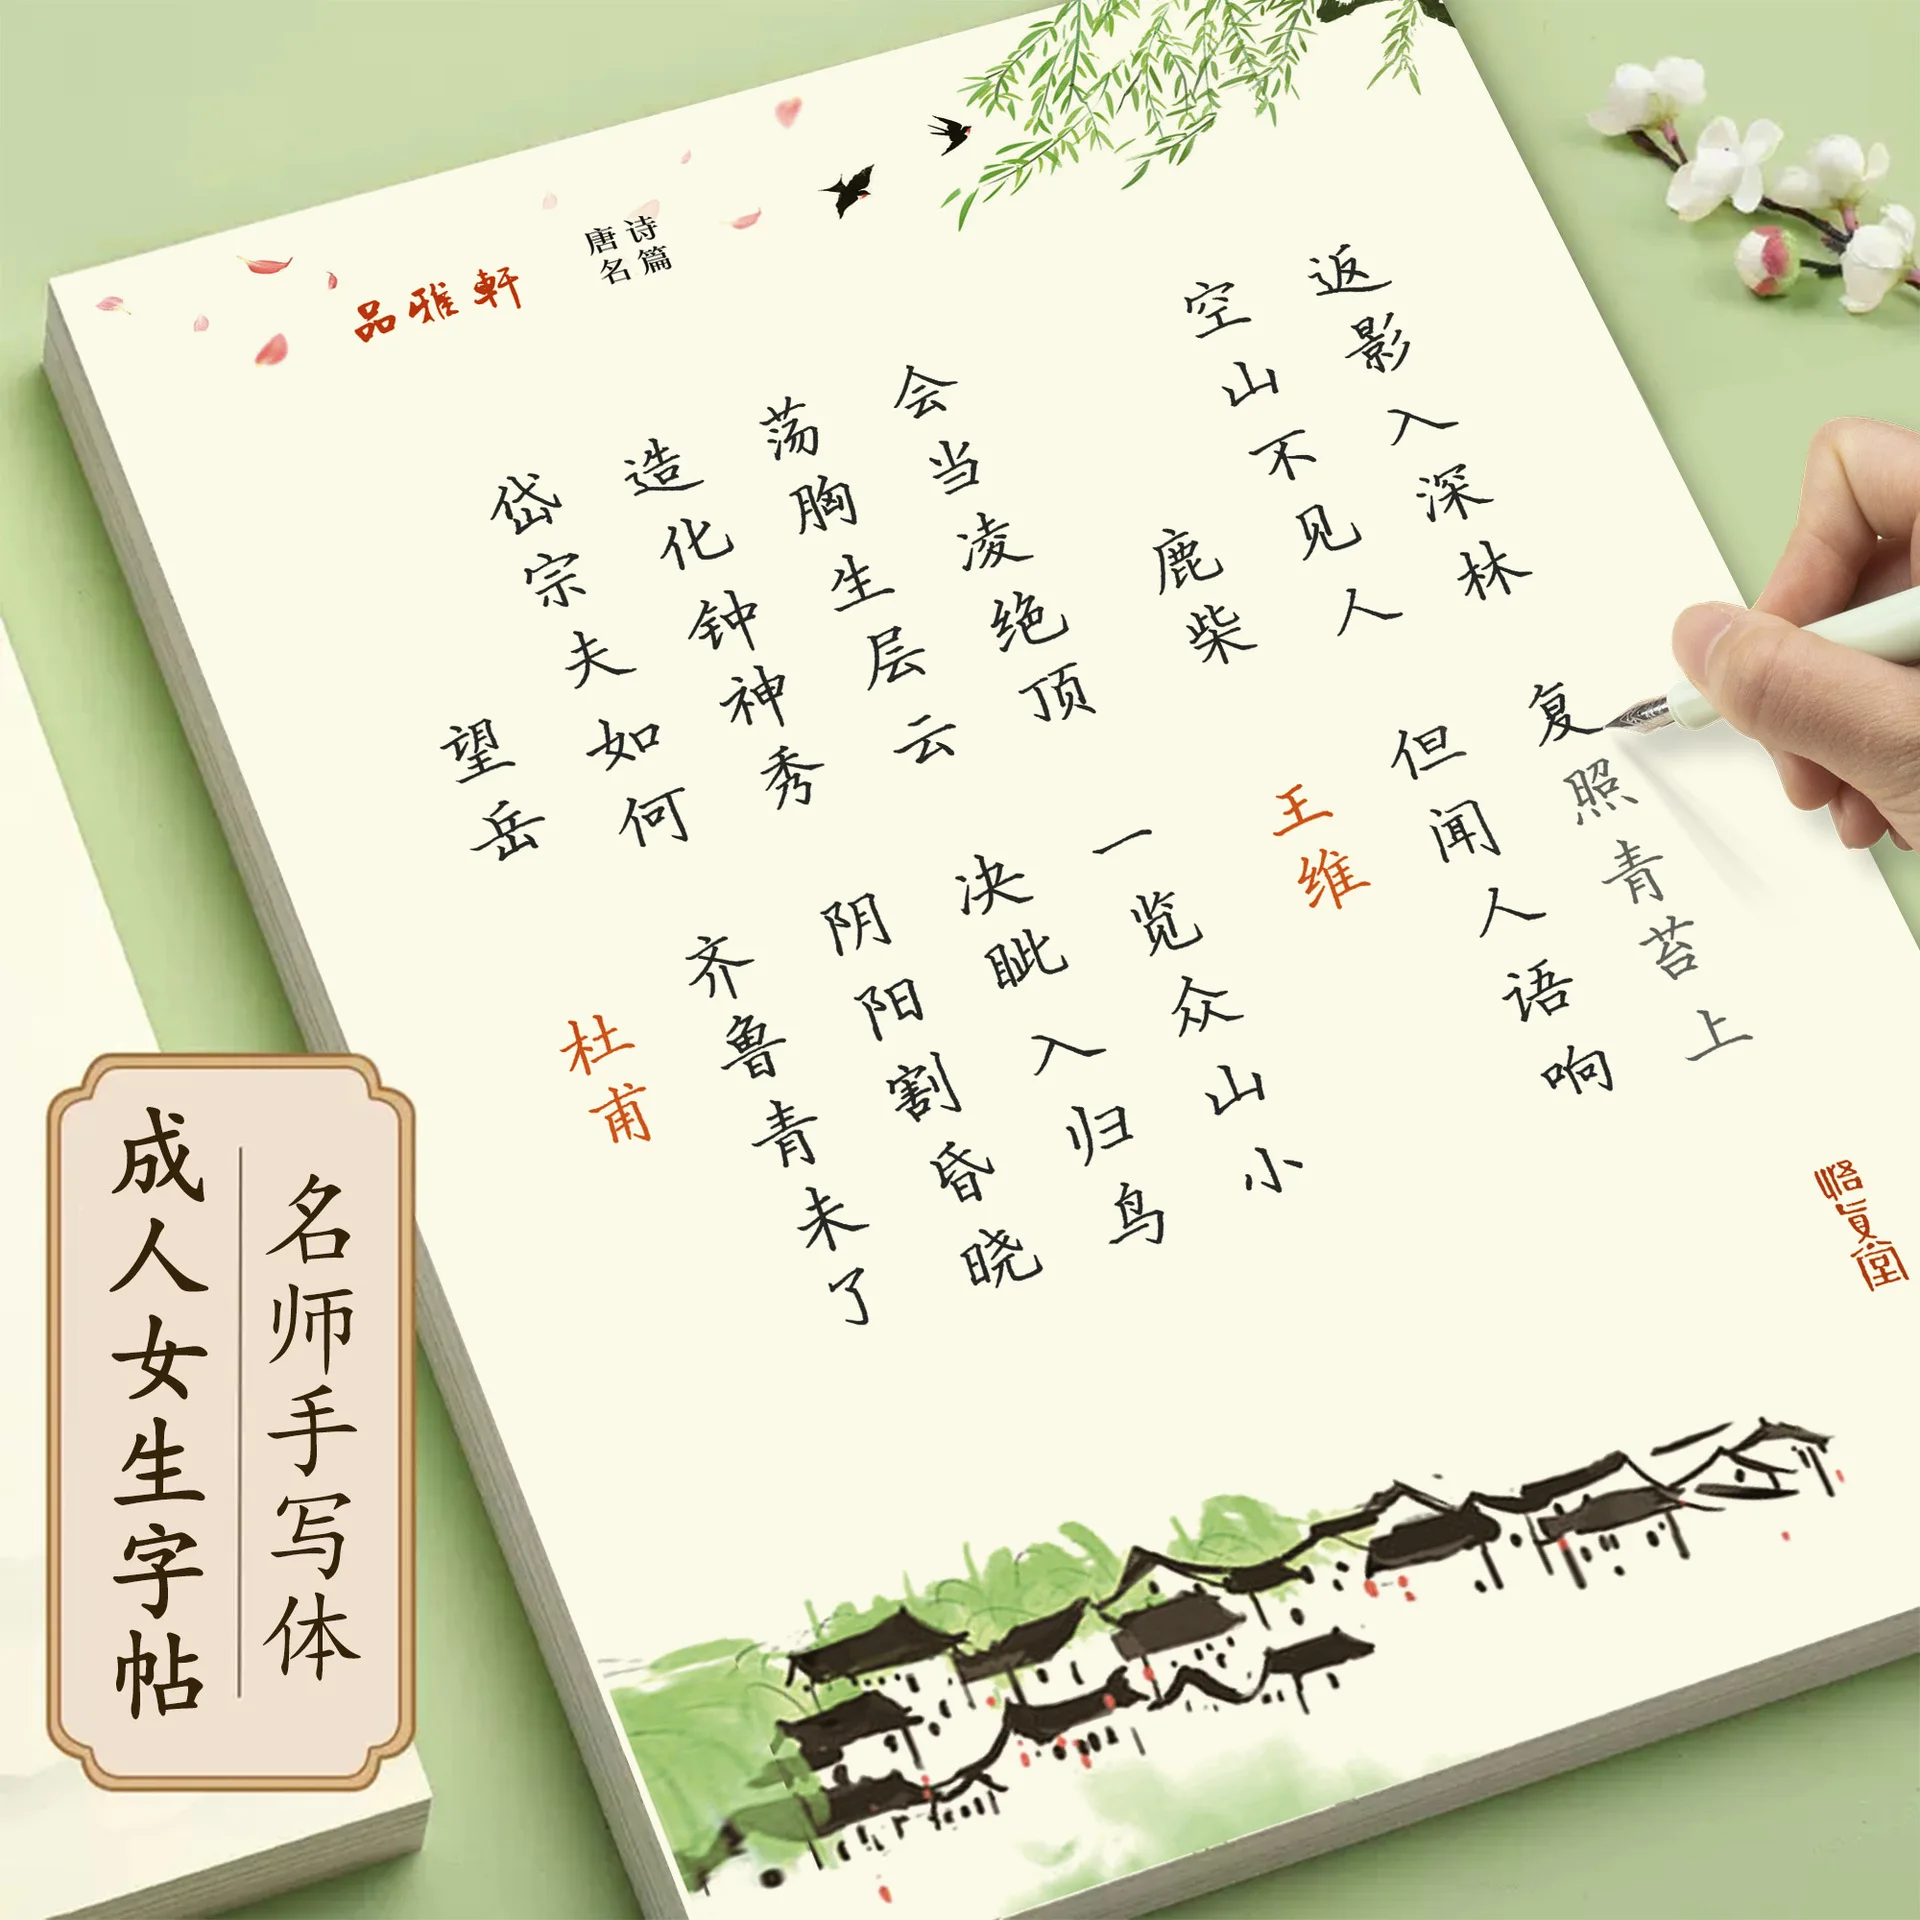 Tang, Song, Ci, Poetry, Prose, Beautiful Regular Script, Xingkai, High School Students, Hard Pen, Pen Practice Calligraphy, Call